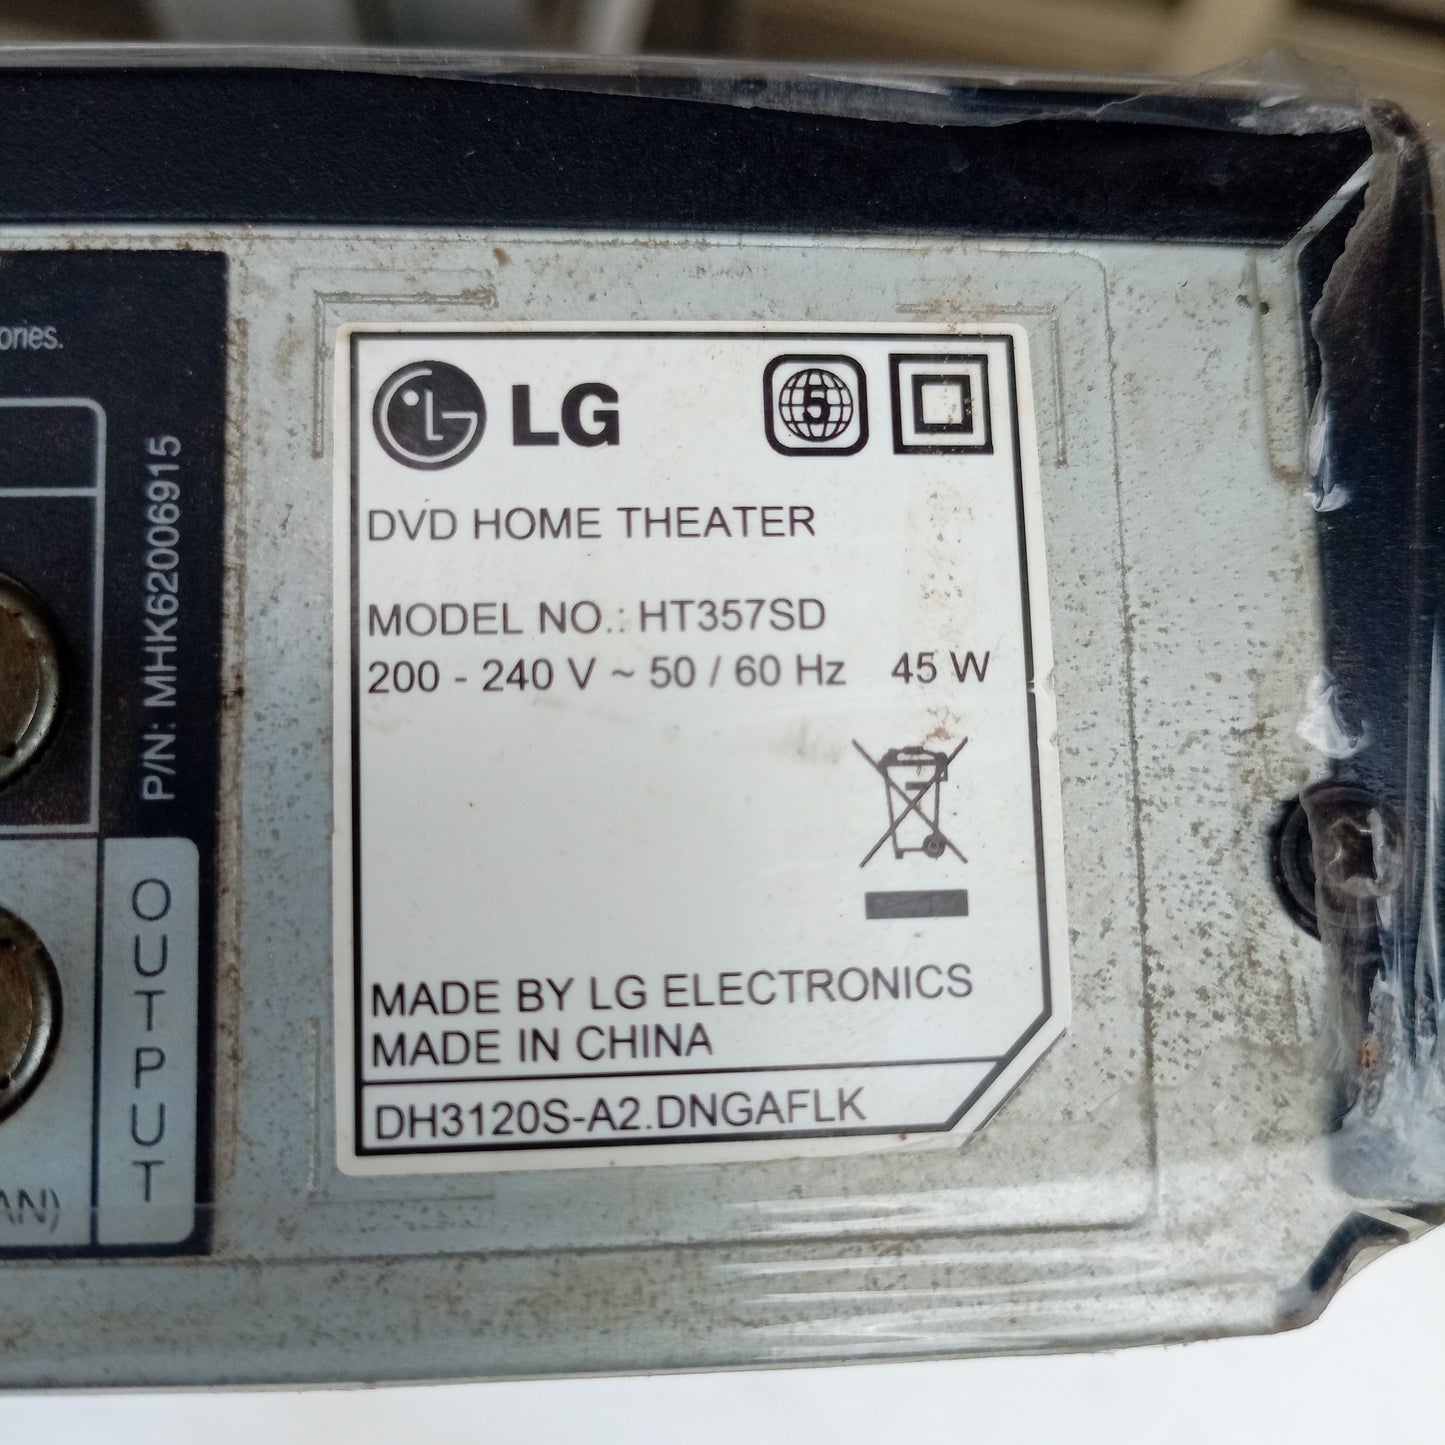 LG HT357SD 300Watts DVD Home Theater Machine Head - Model number Sticker